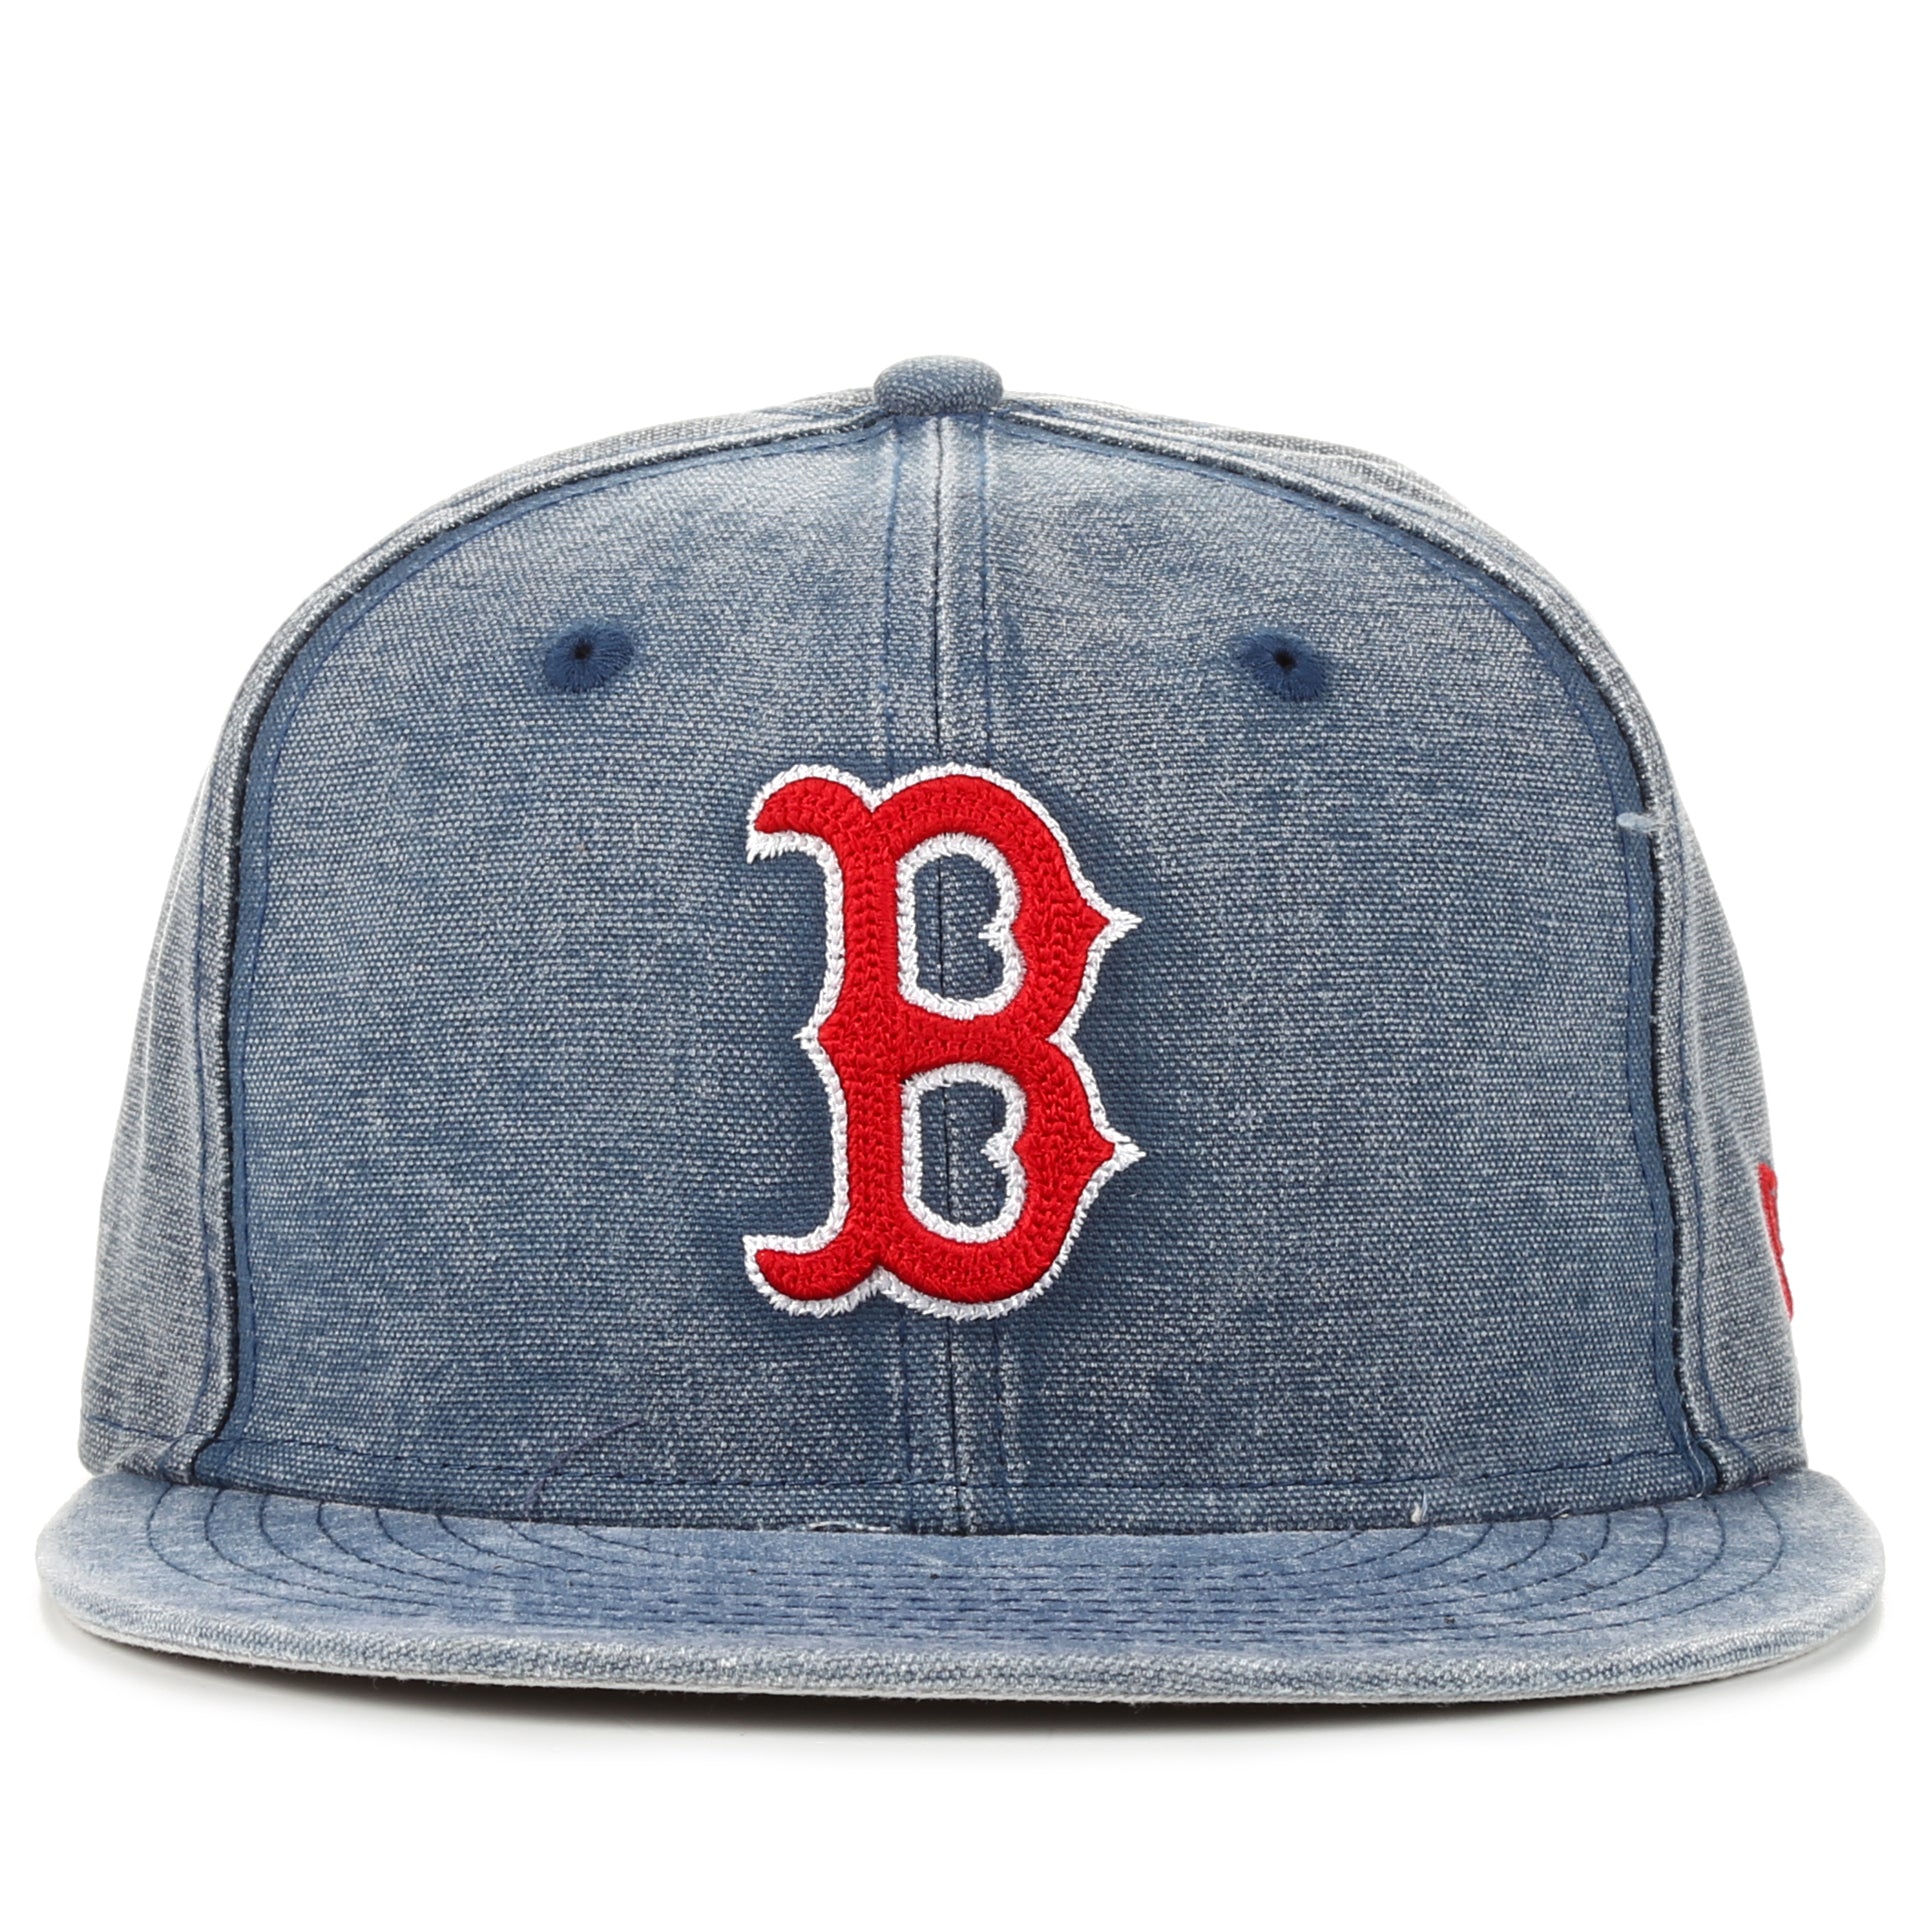 New Era 9Fifty Washed Over Snapback - Boston Red Sox/Dark Denim